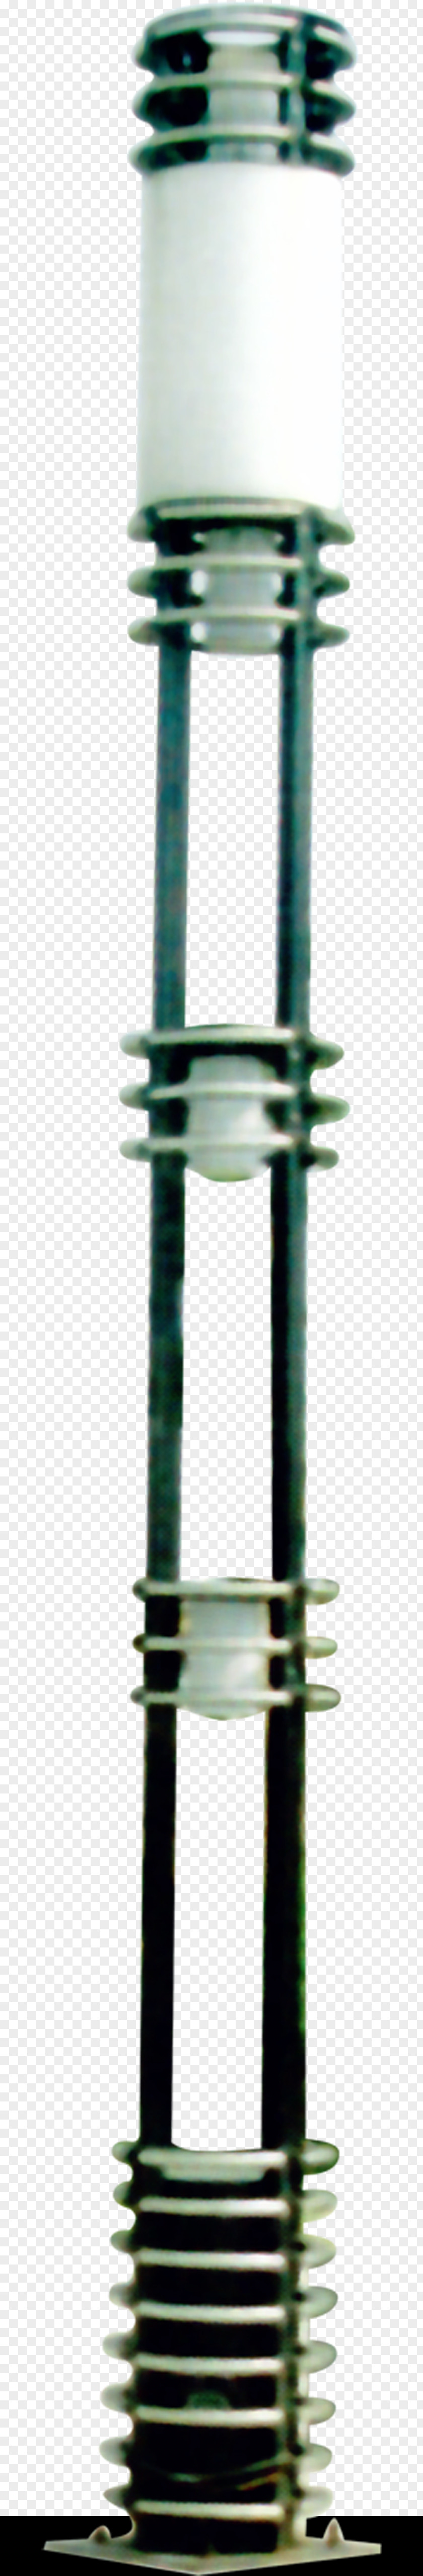 Lamp Street Light Pole Texture Modeling Renderings Download PNG